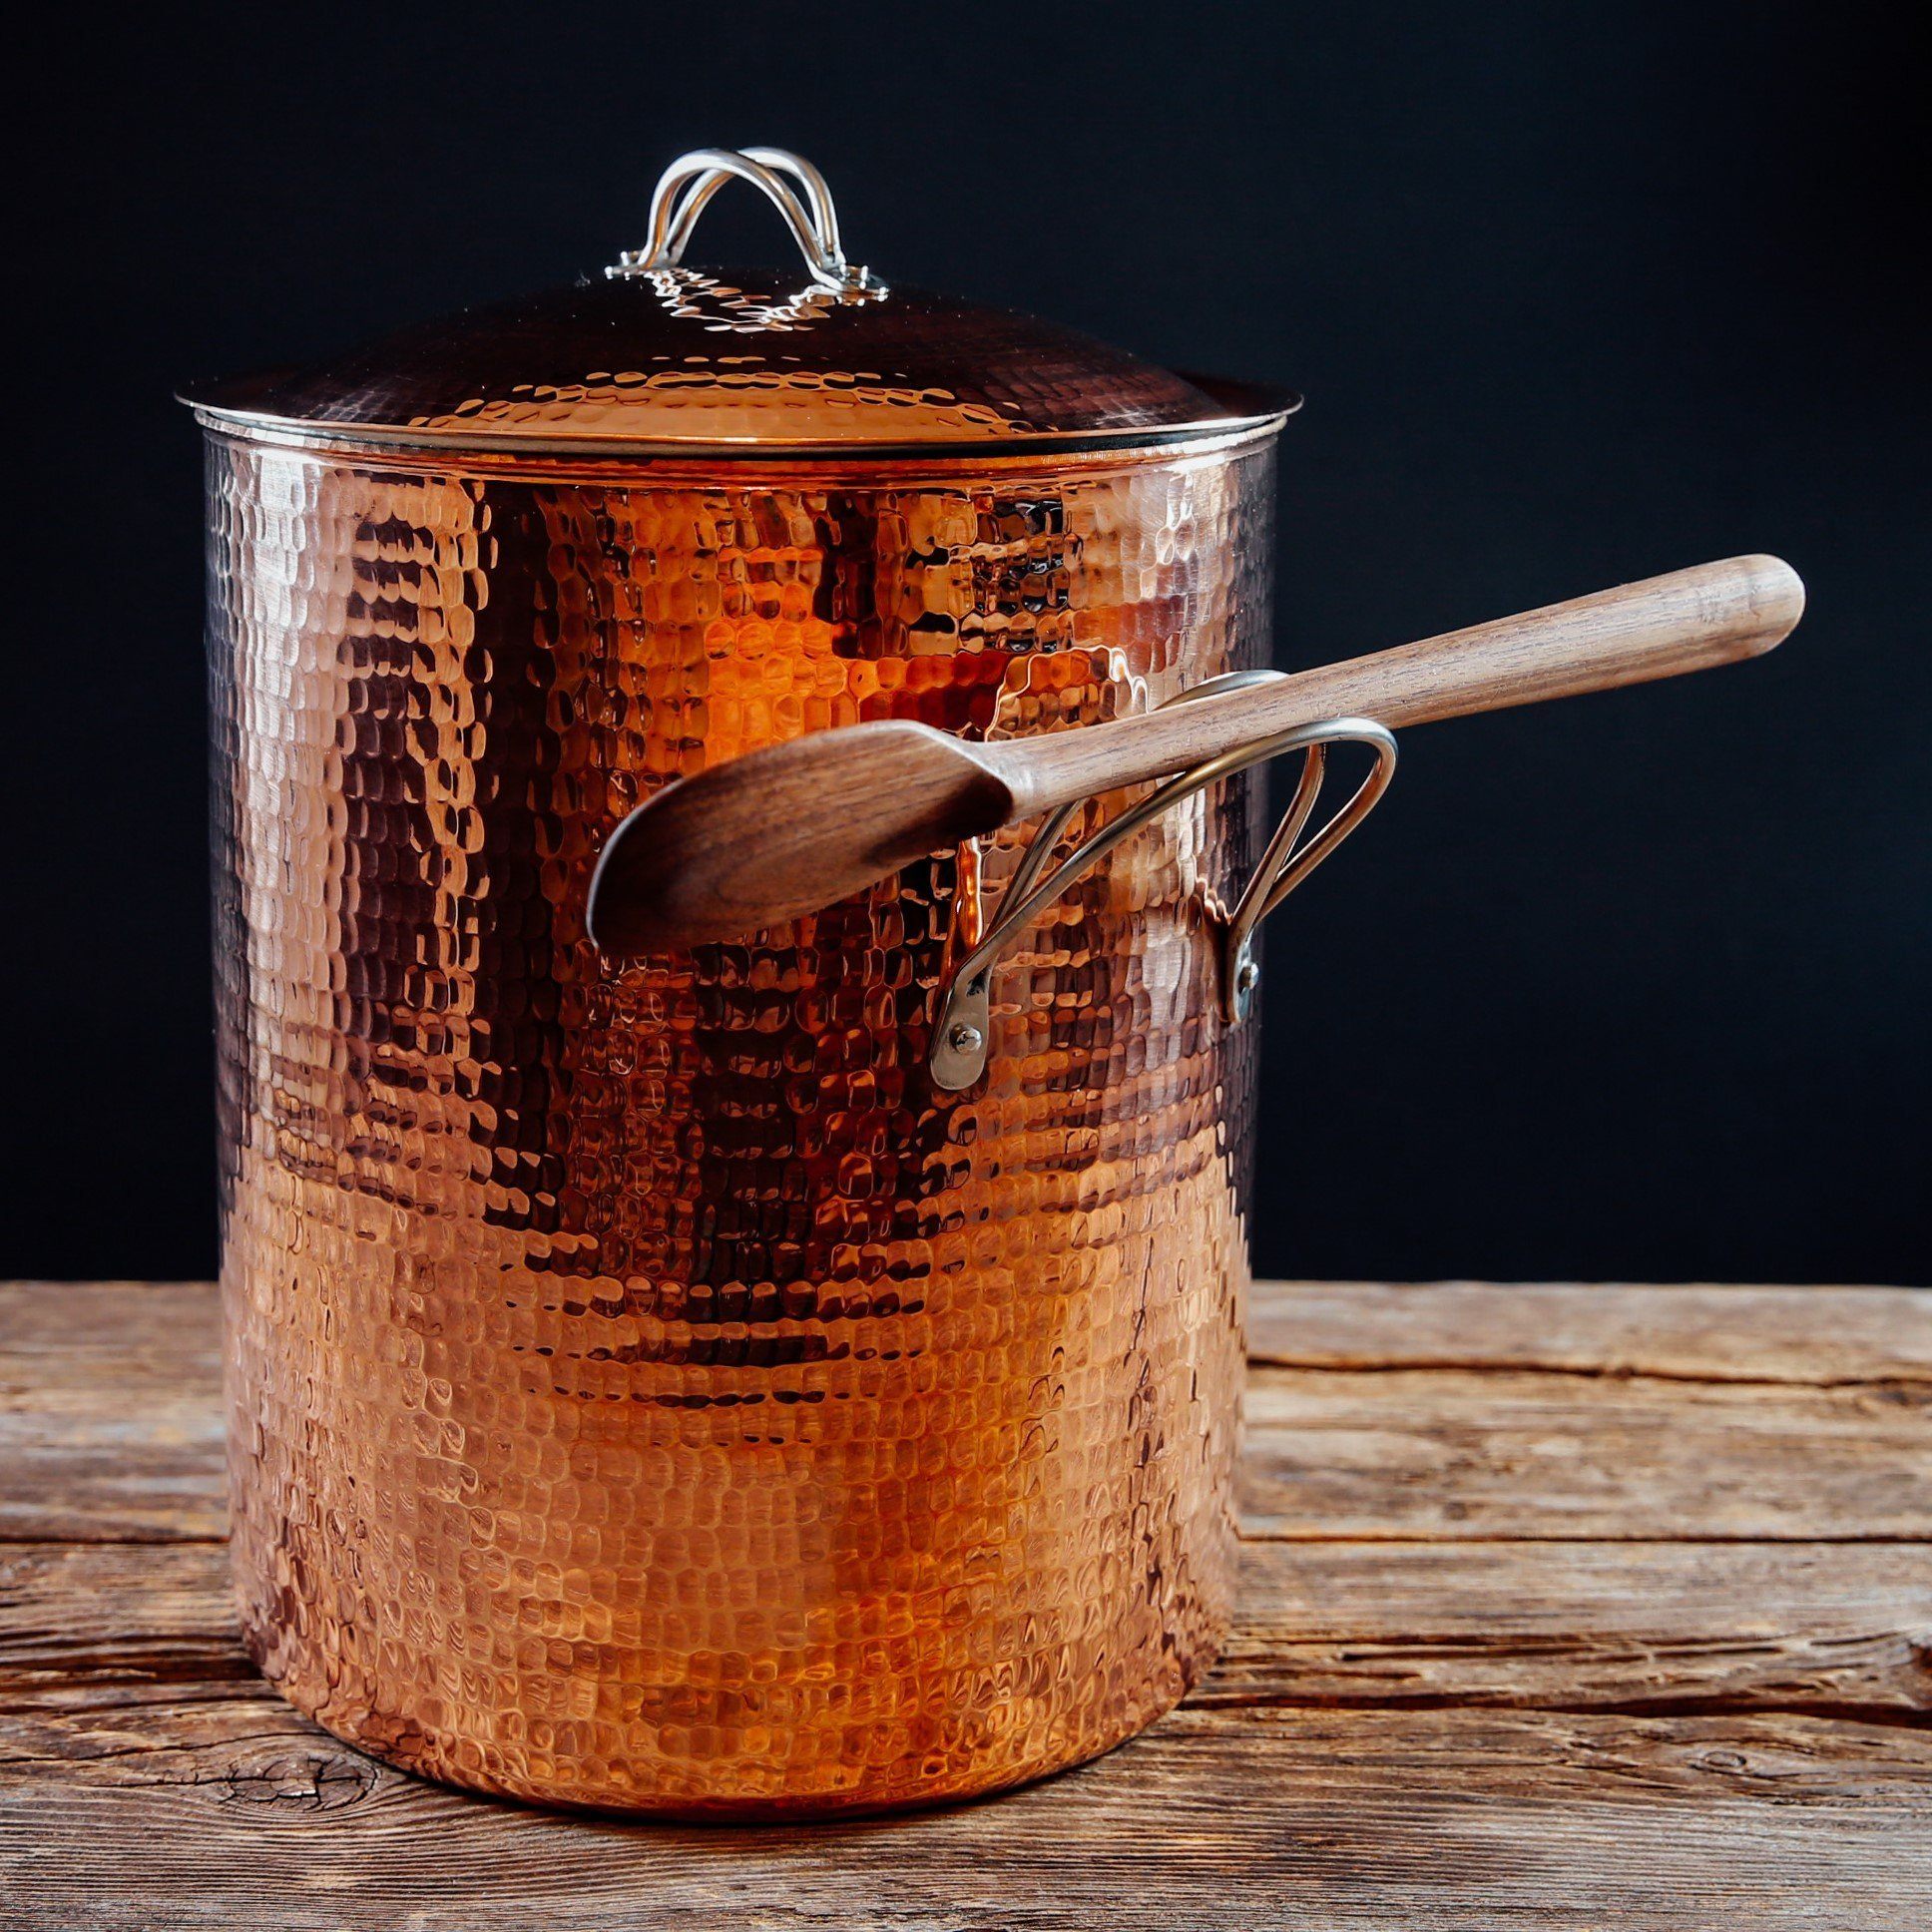 Handmade Copper Frying Pan Skillet by Sertodo Copper